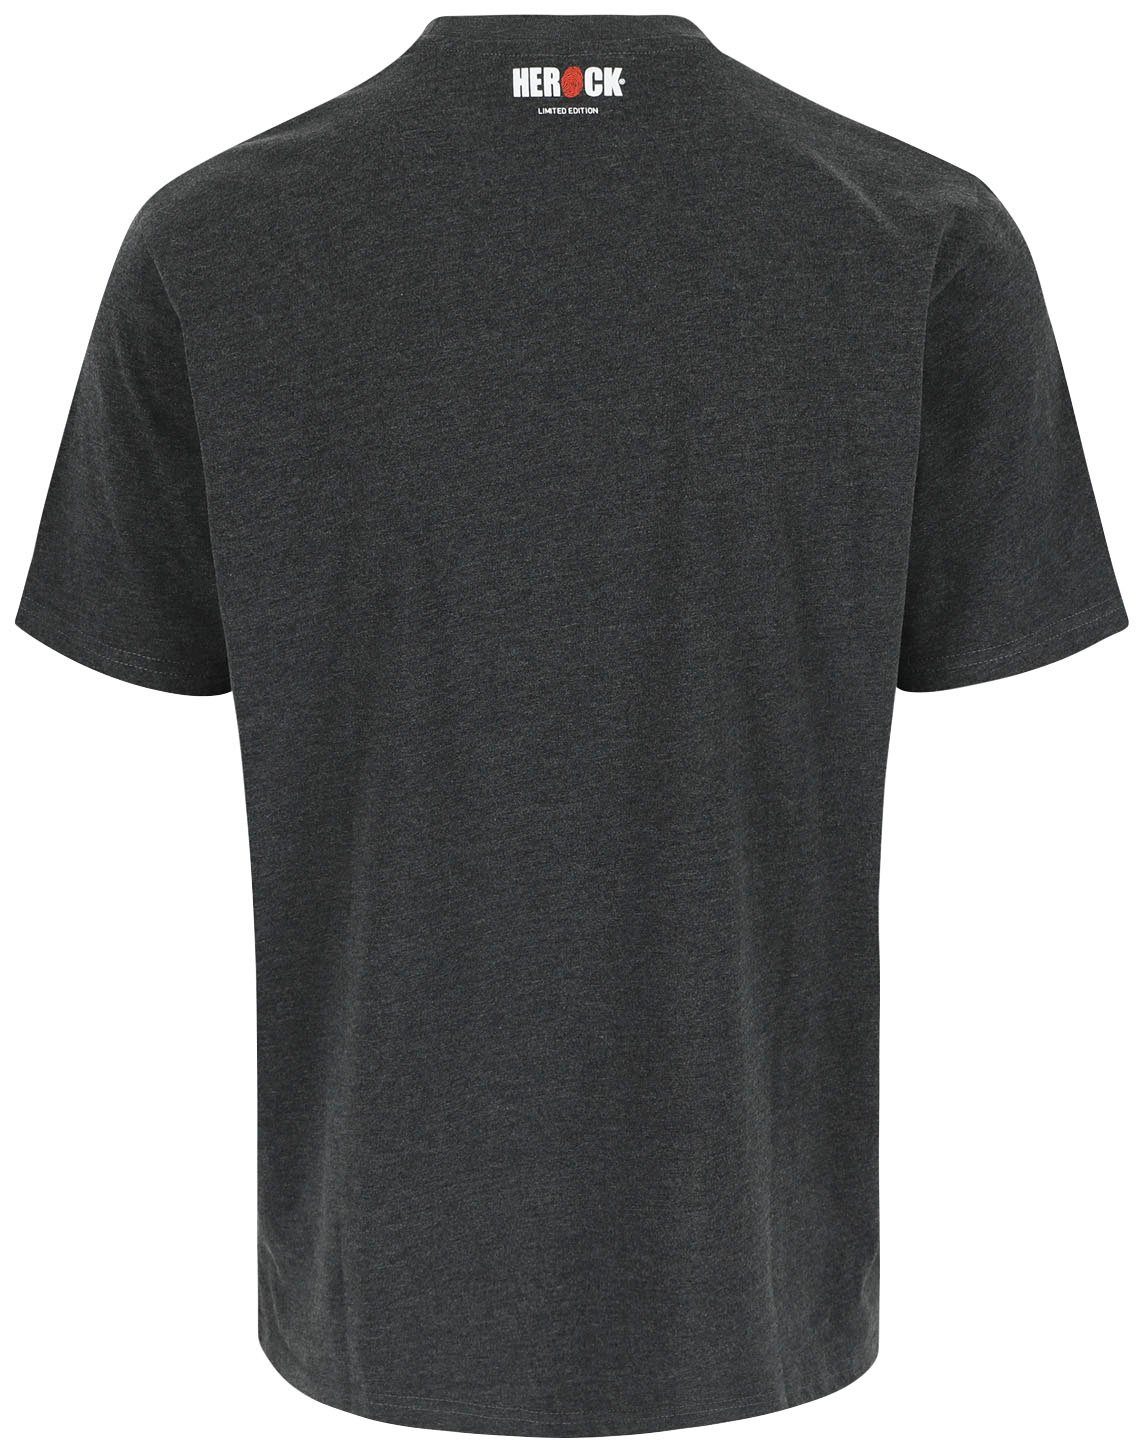 T-Shirt Herock Limited Maximus Edition